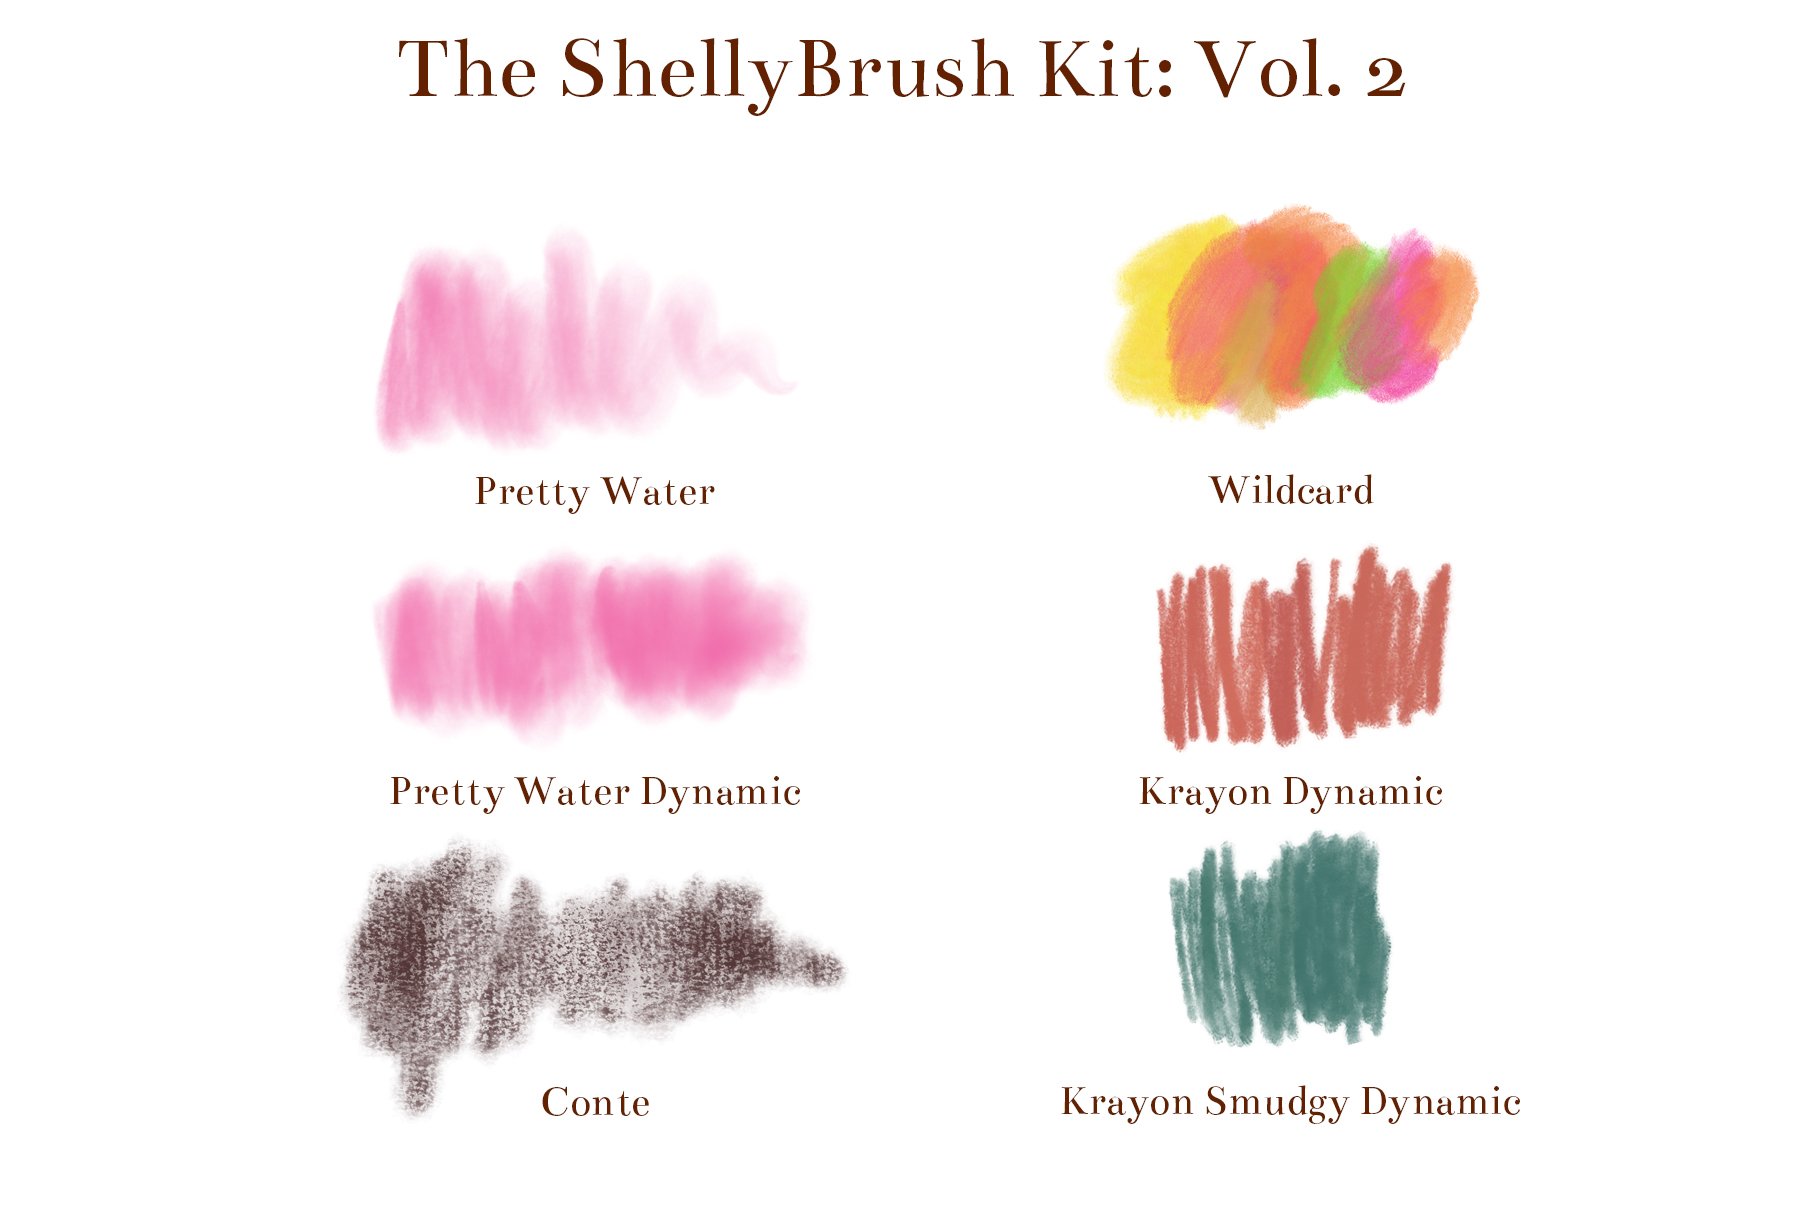 shellybrush kit vol 2 cheat sheet 2 145